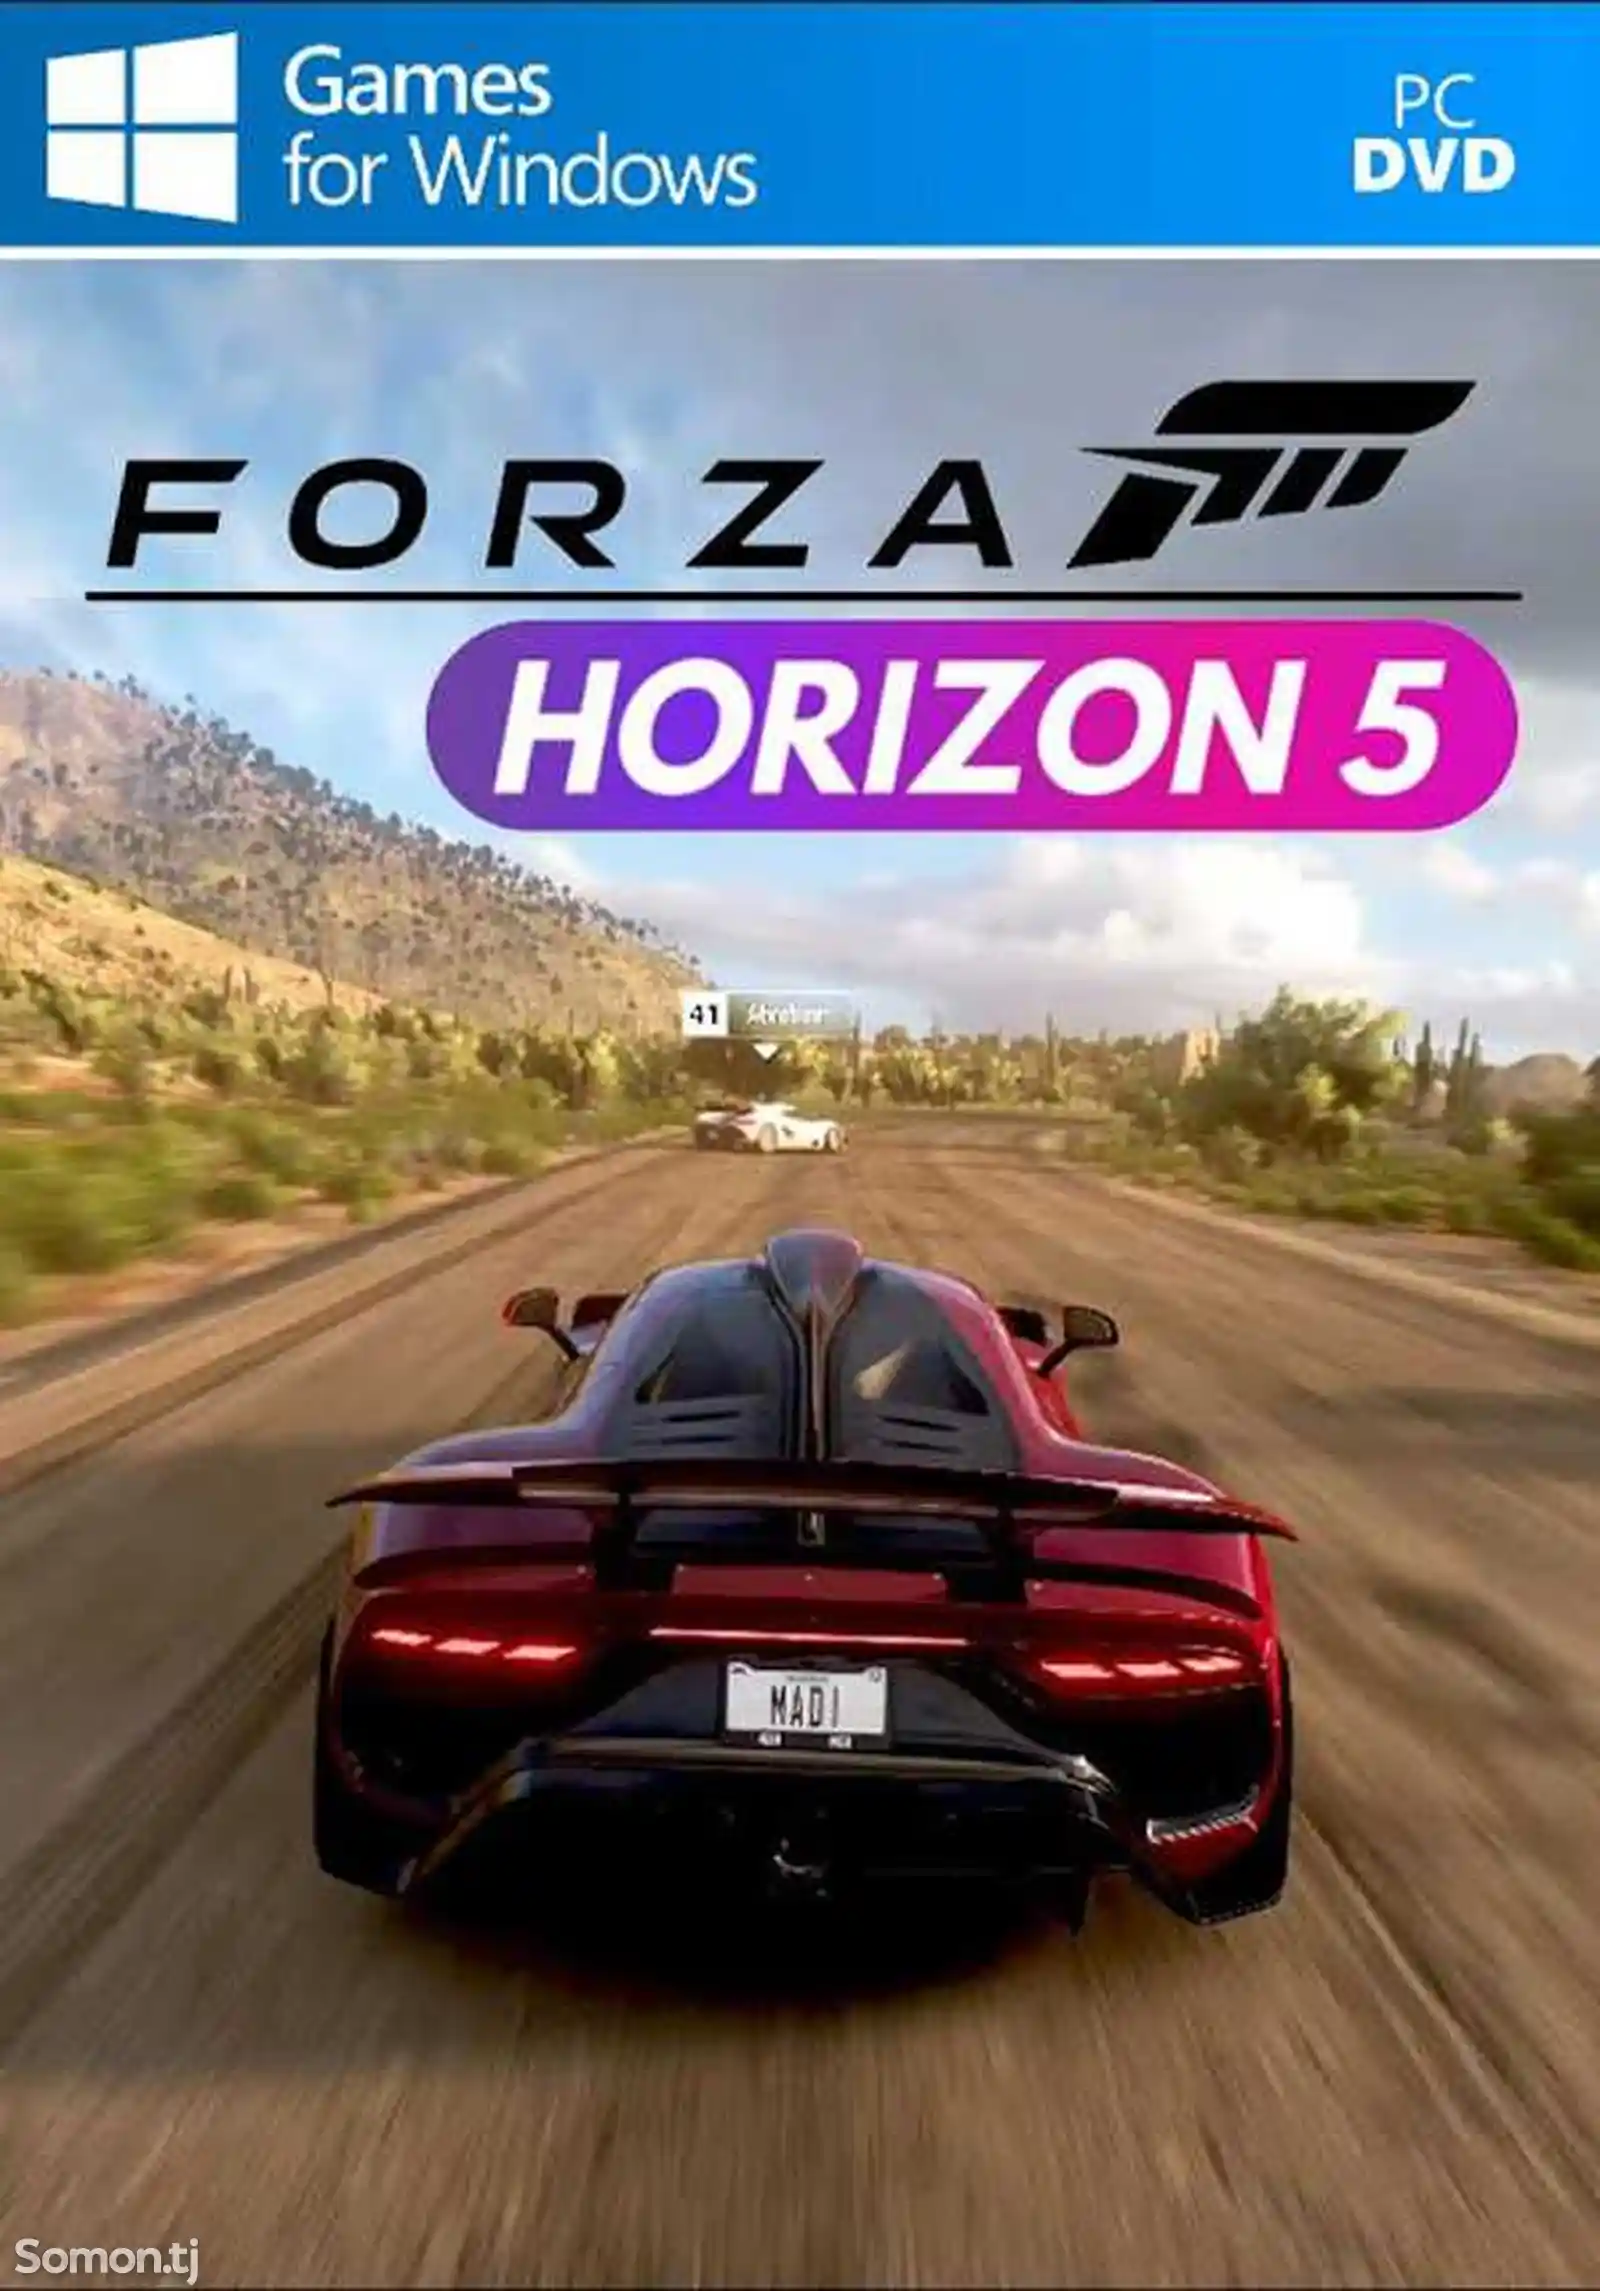 Игра Forza horizon 5 для компьютера-пк-pc-1